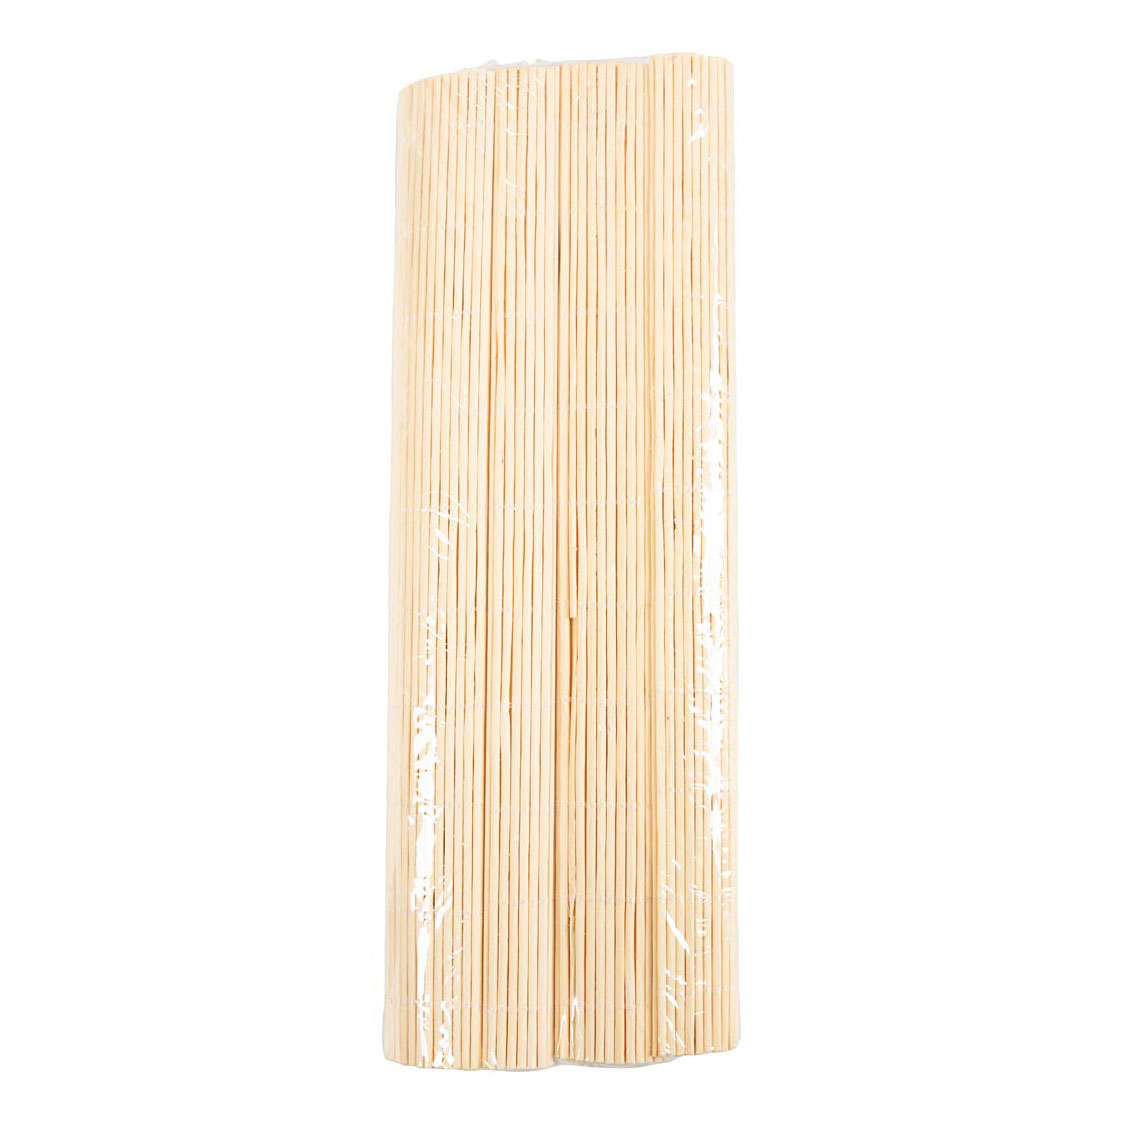 Tapis en bambou pour feutrage, 45x30cm